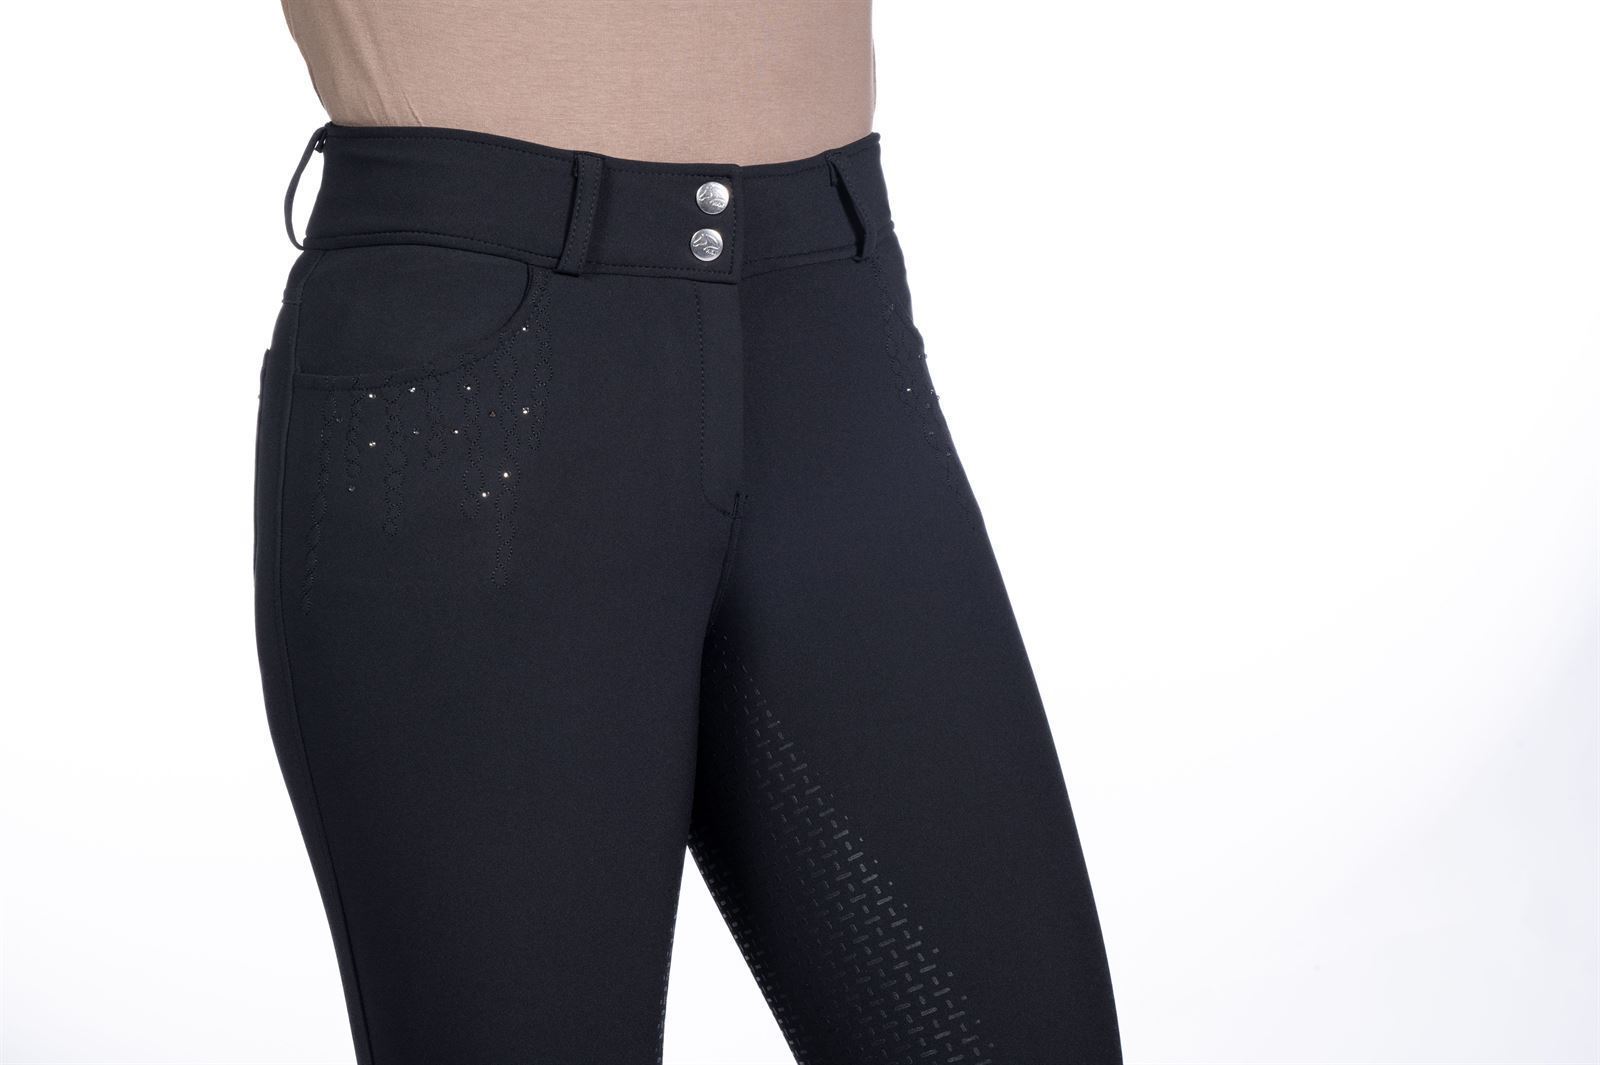 Pantalón mujer HKM Sports Equipment Savona Style culera silicona, color negro - Imagen 2